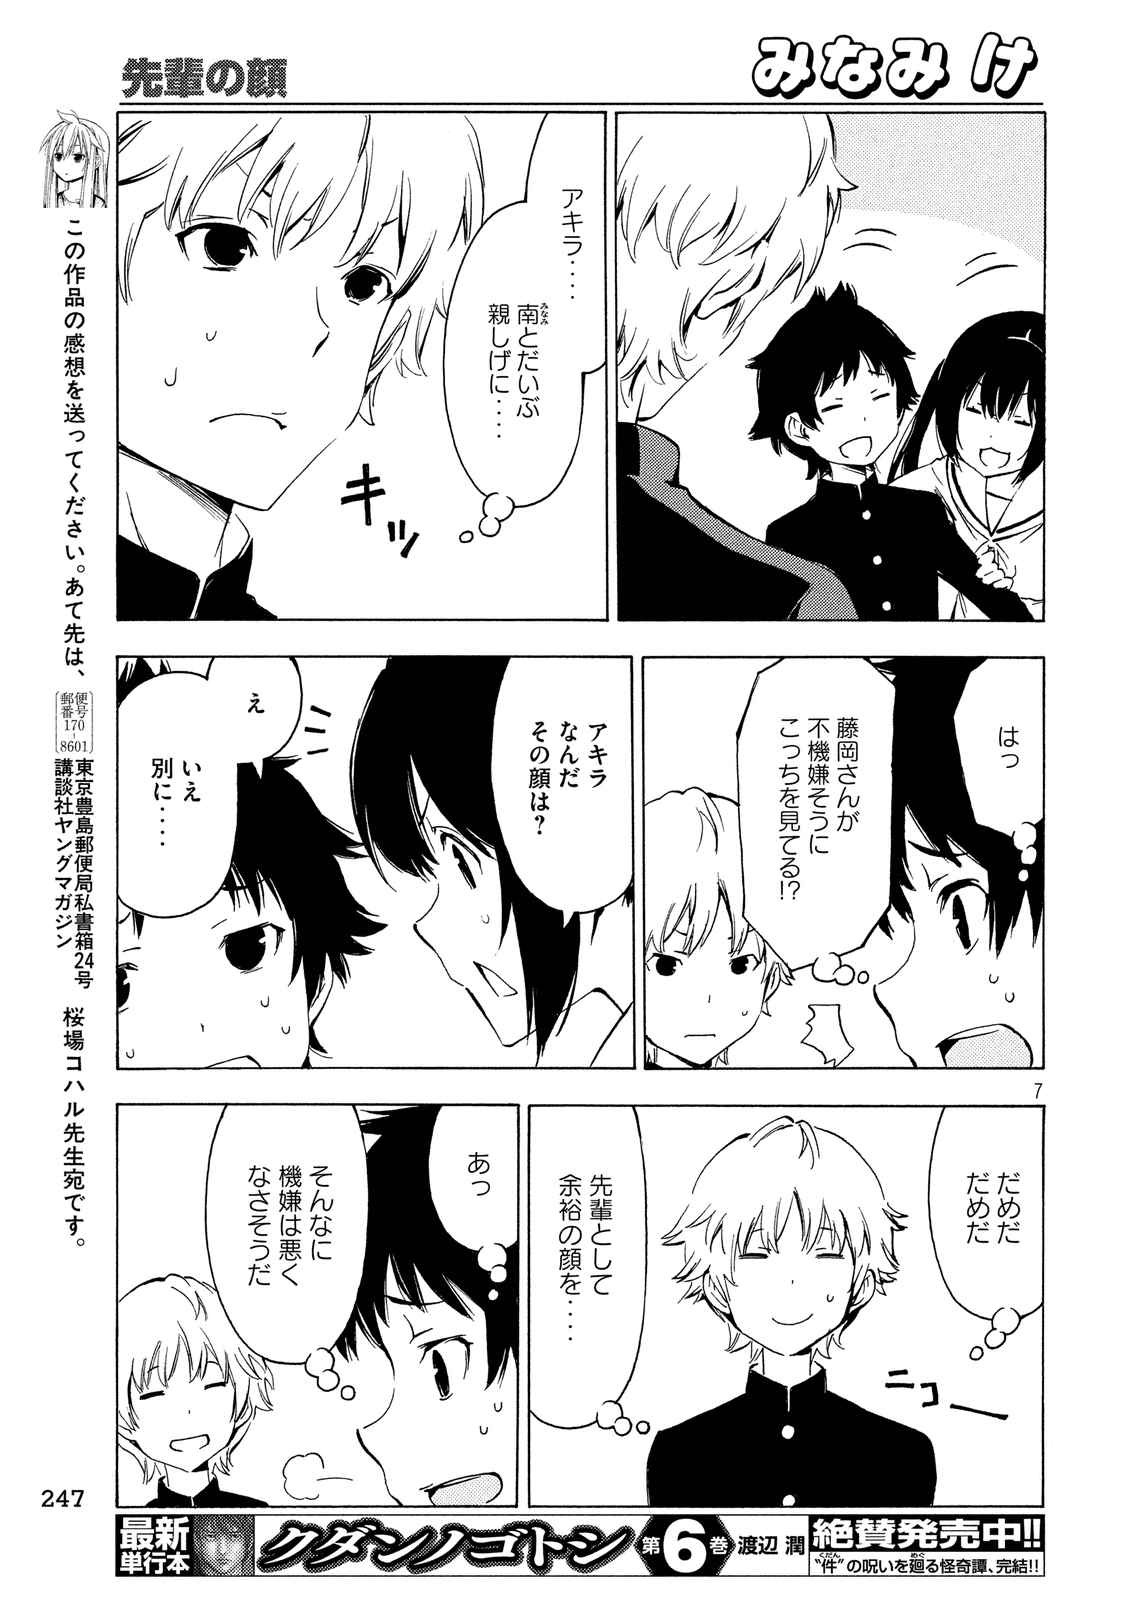 Minami-ke - Chapter 313 - Page 7